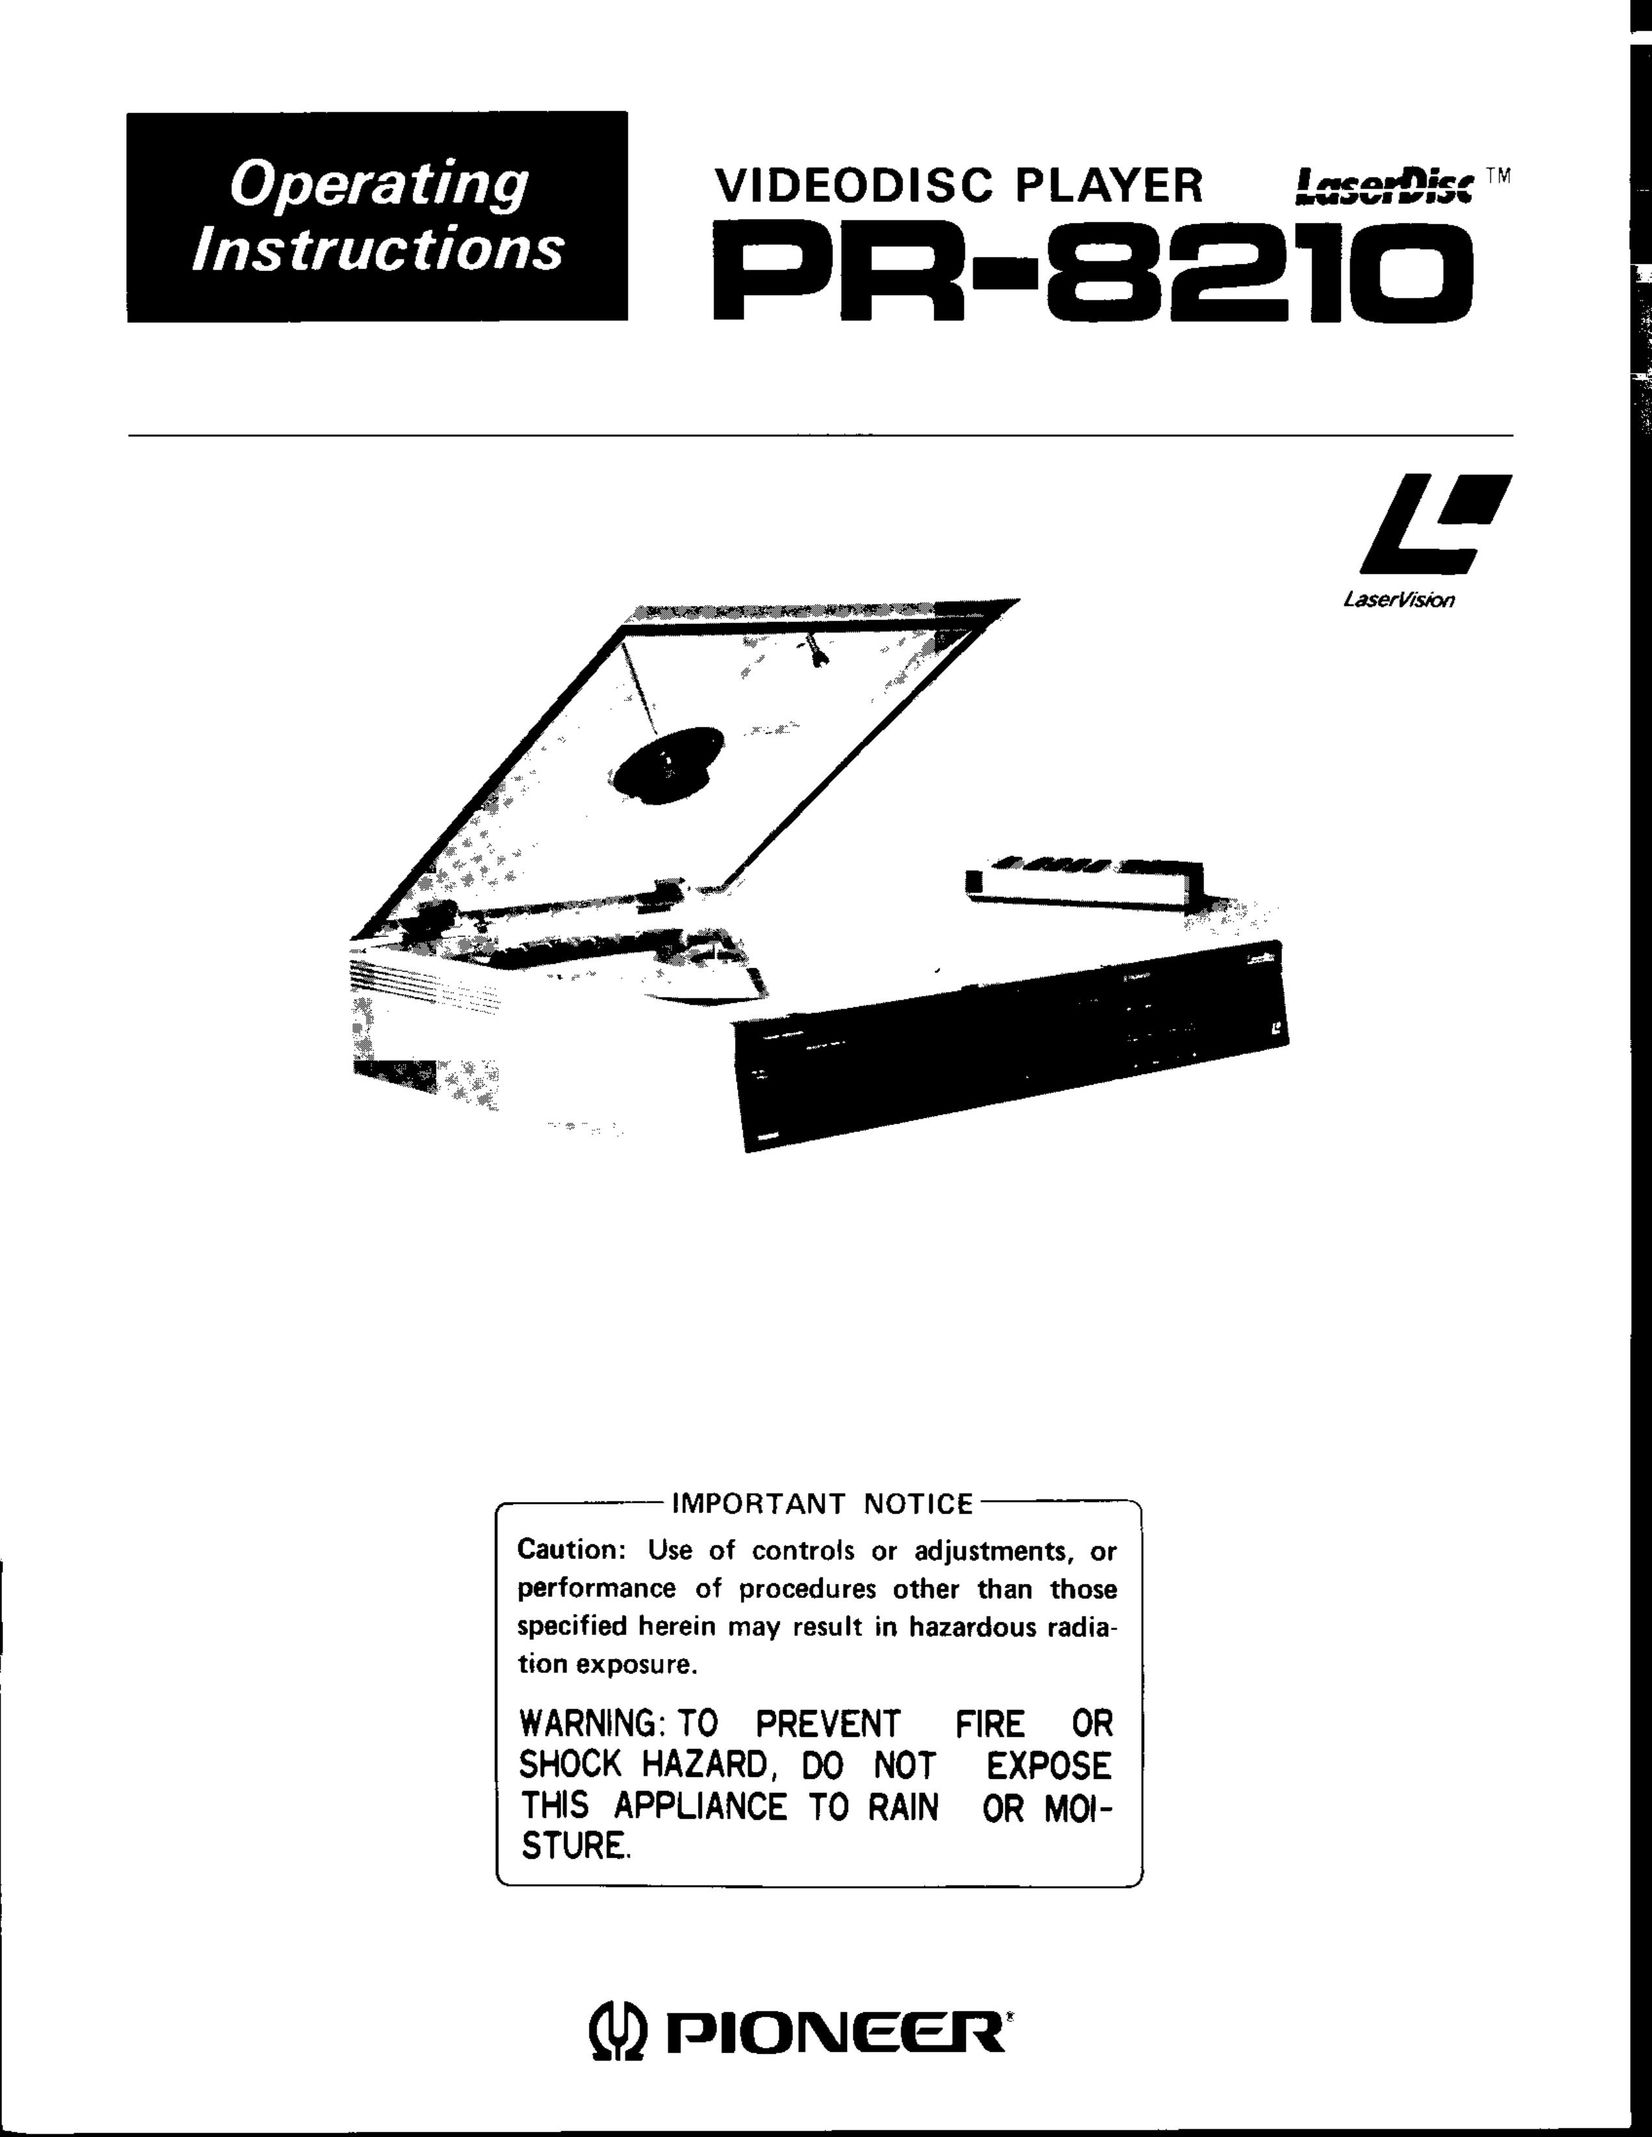 Pioneer PR-8210 Portable DVD Player User Manual